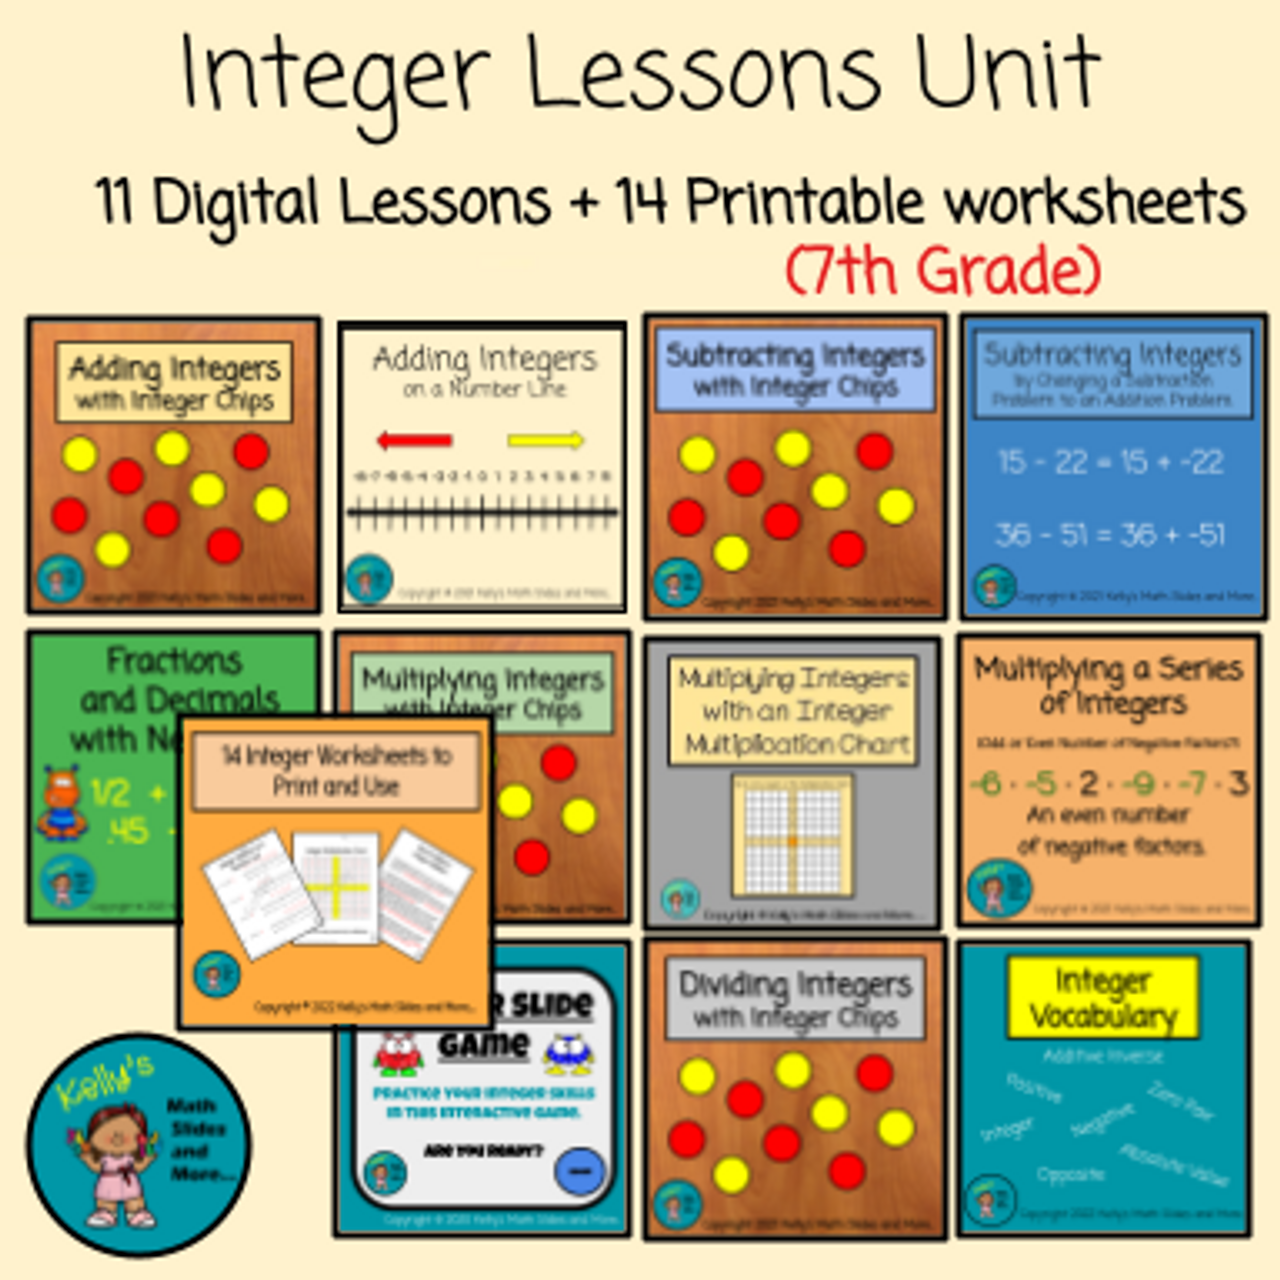 Integers Unit - 11 Digital Lessons plus 14 printable worksheets